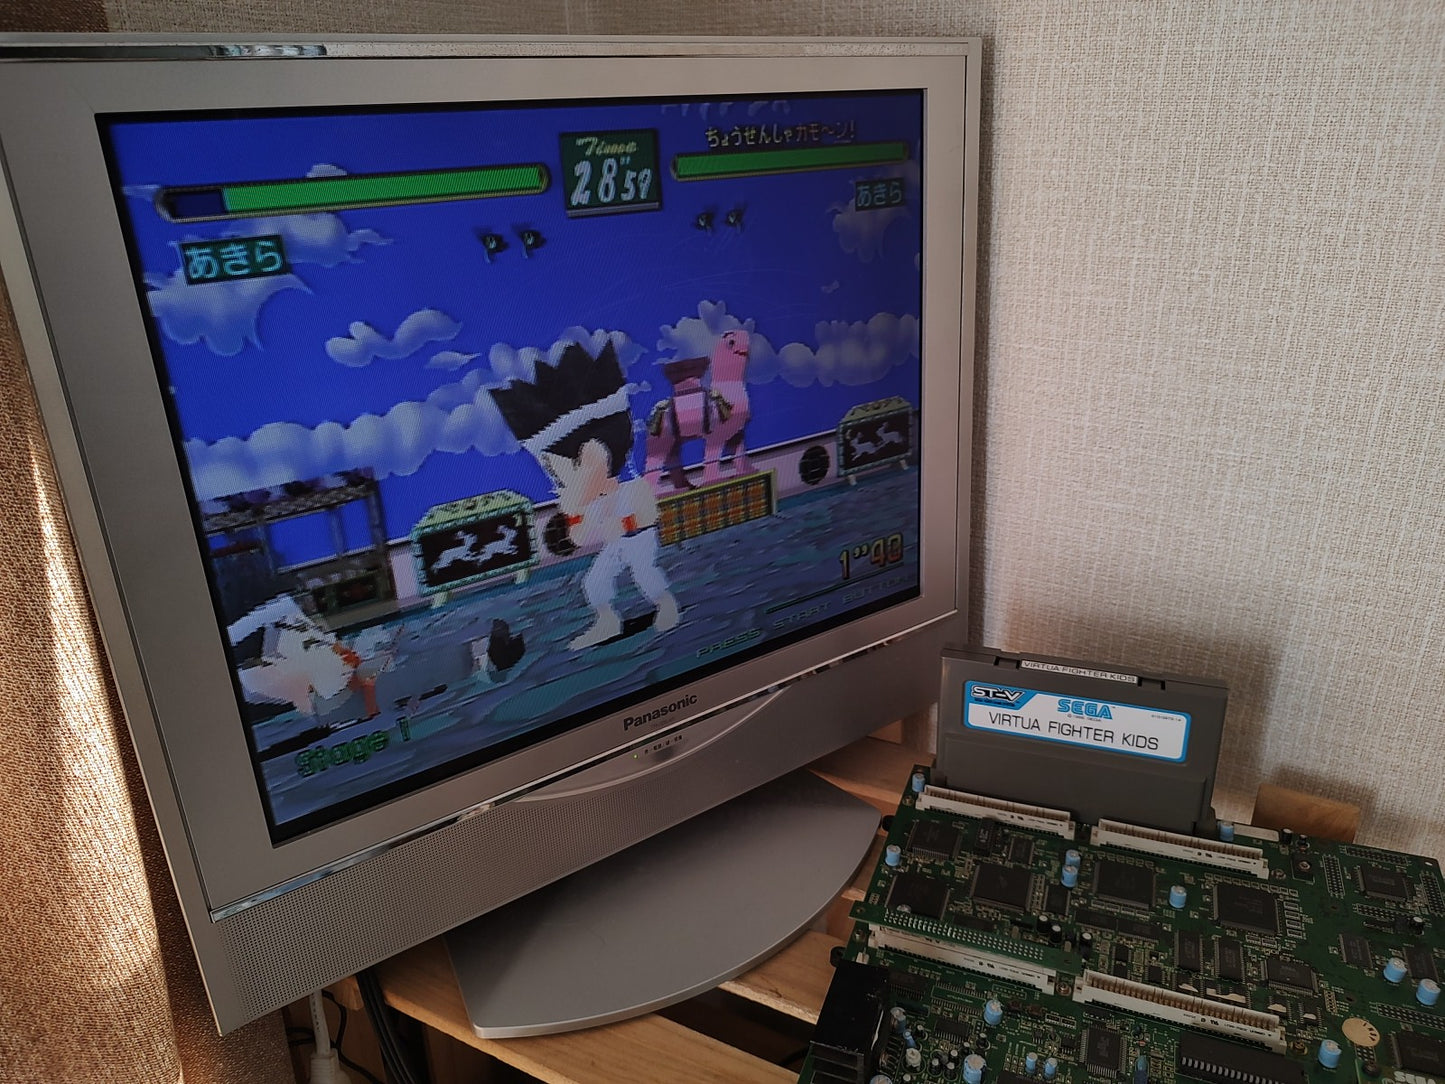 Virtua Fighter Kids SEGA ST-V STV Arcade Game cartridge, Instruction card-f0828-